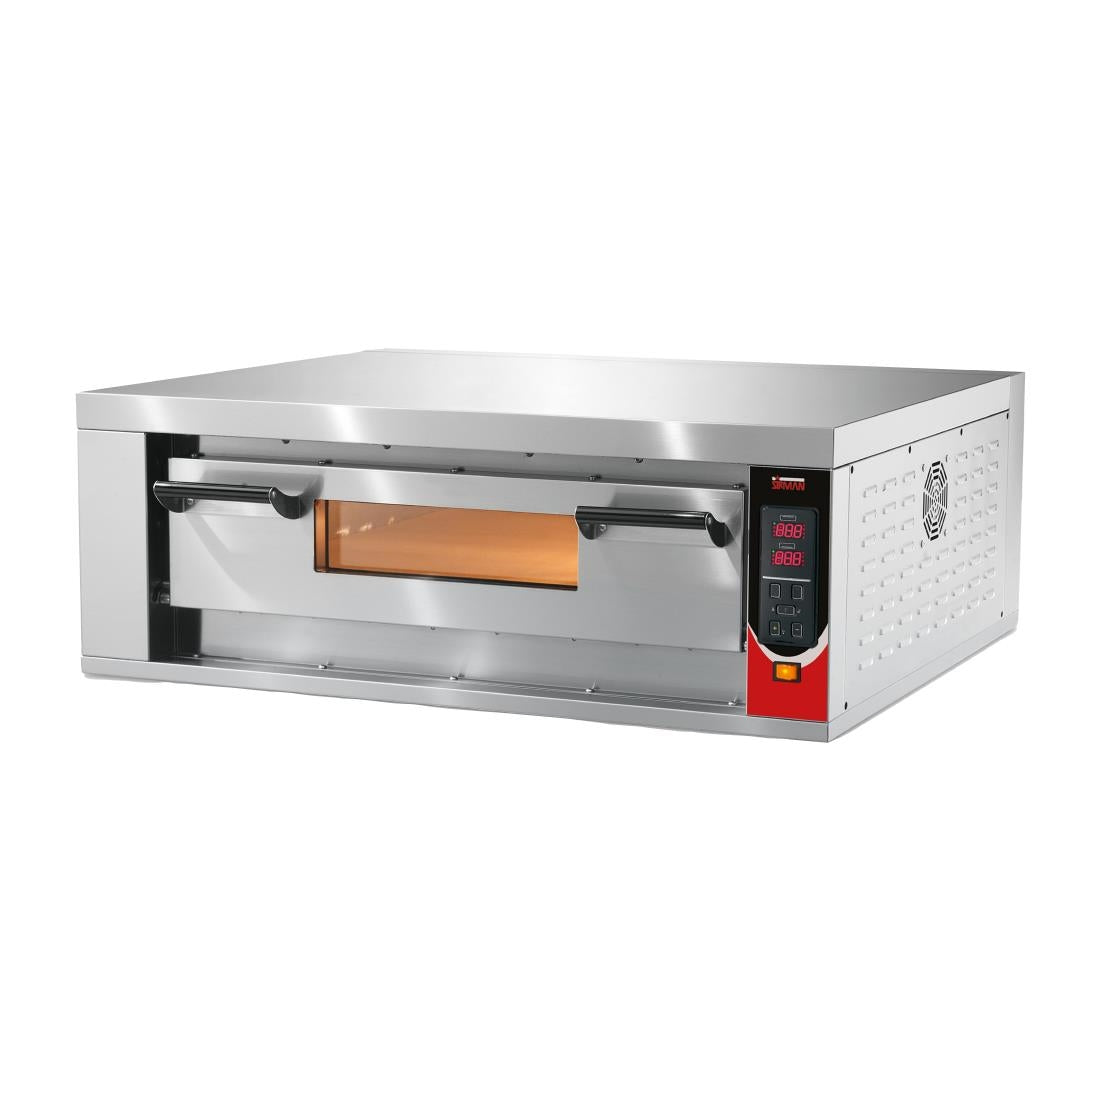 CU081 Sirman Vesuvio 85x70 Single Deck Pizza Oven JD Catering Equipment Solutions Ltd